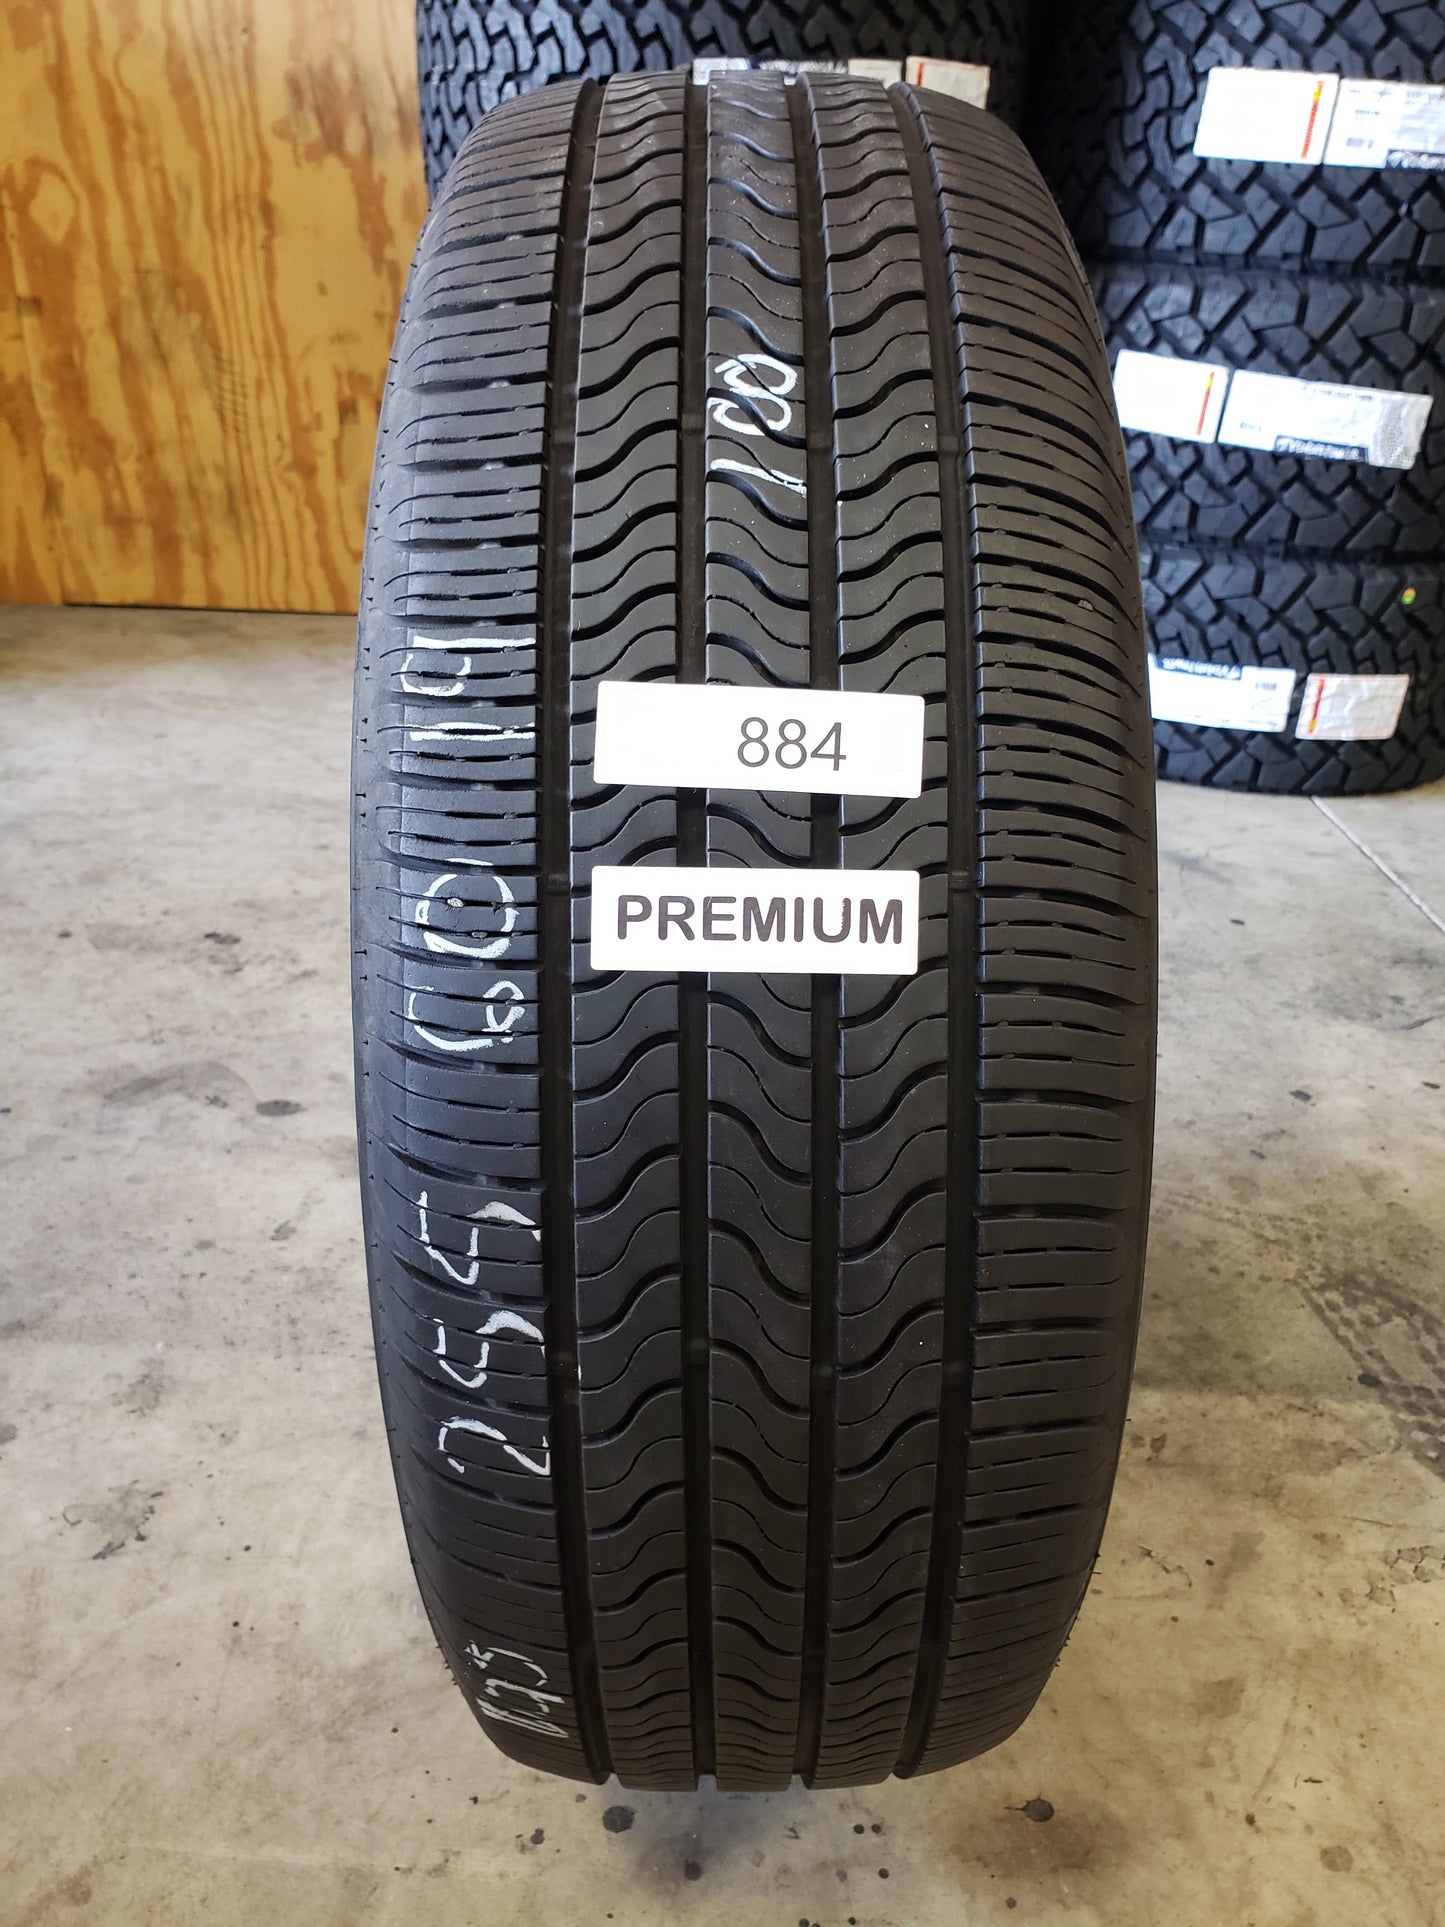 SINGLE 255/50R19 Firestone All Season 108 S SL - Premium Used Tires